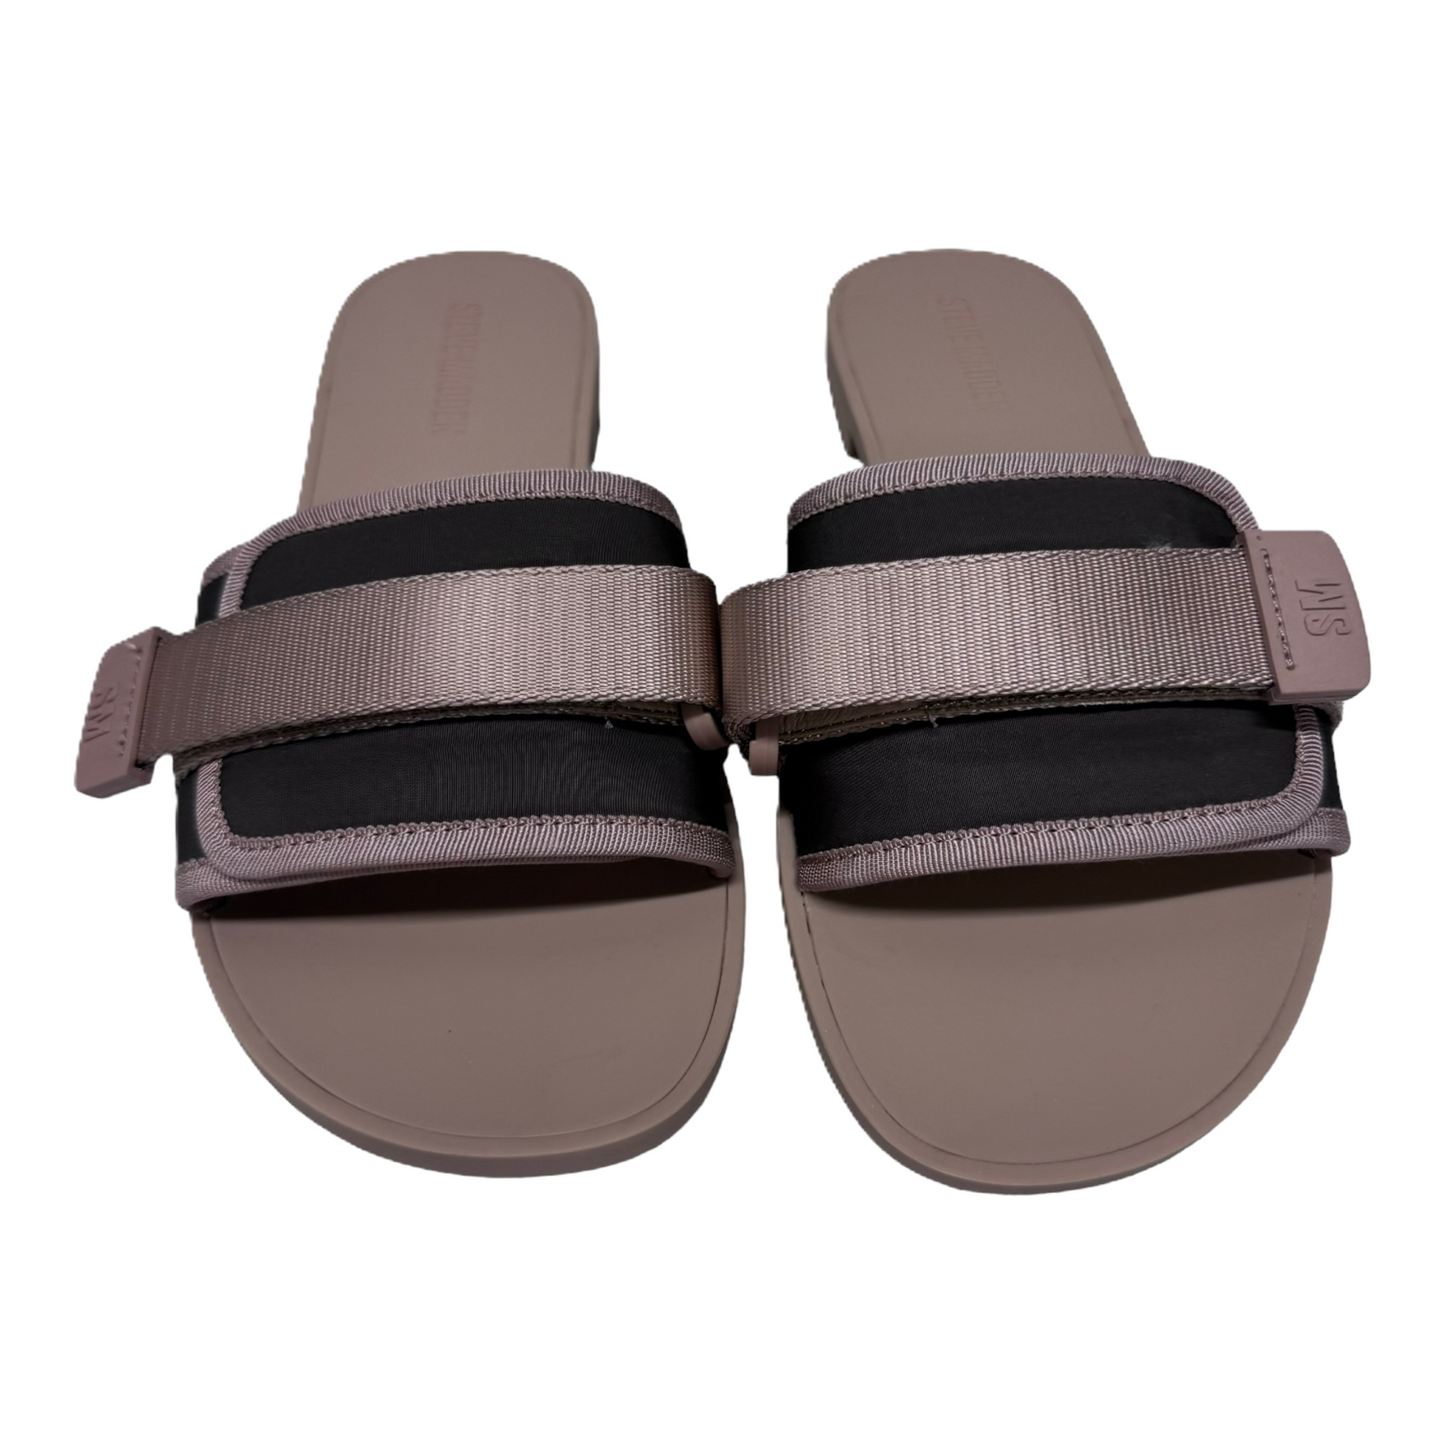 Tan Sandals Flats By Steve Madden, Size: 8